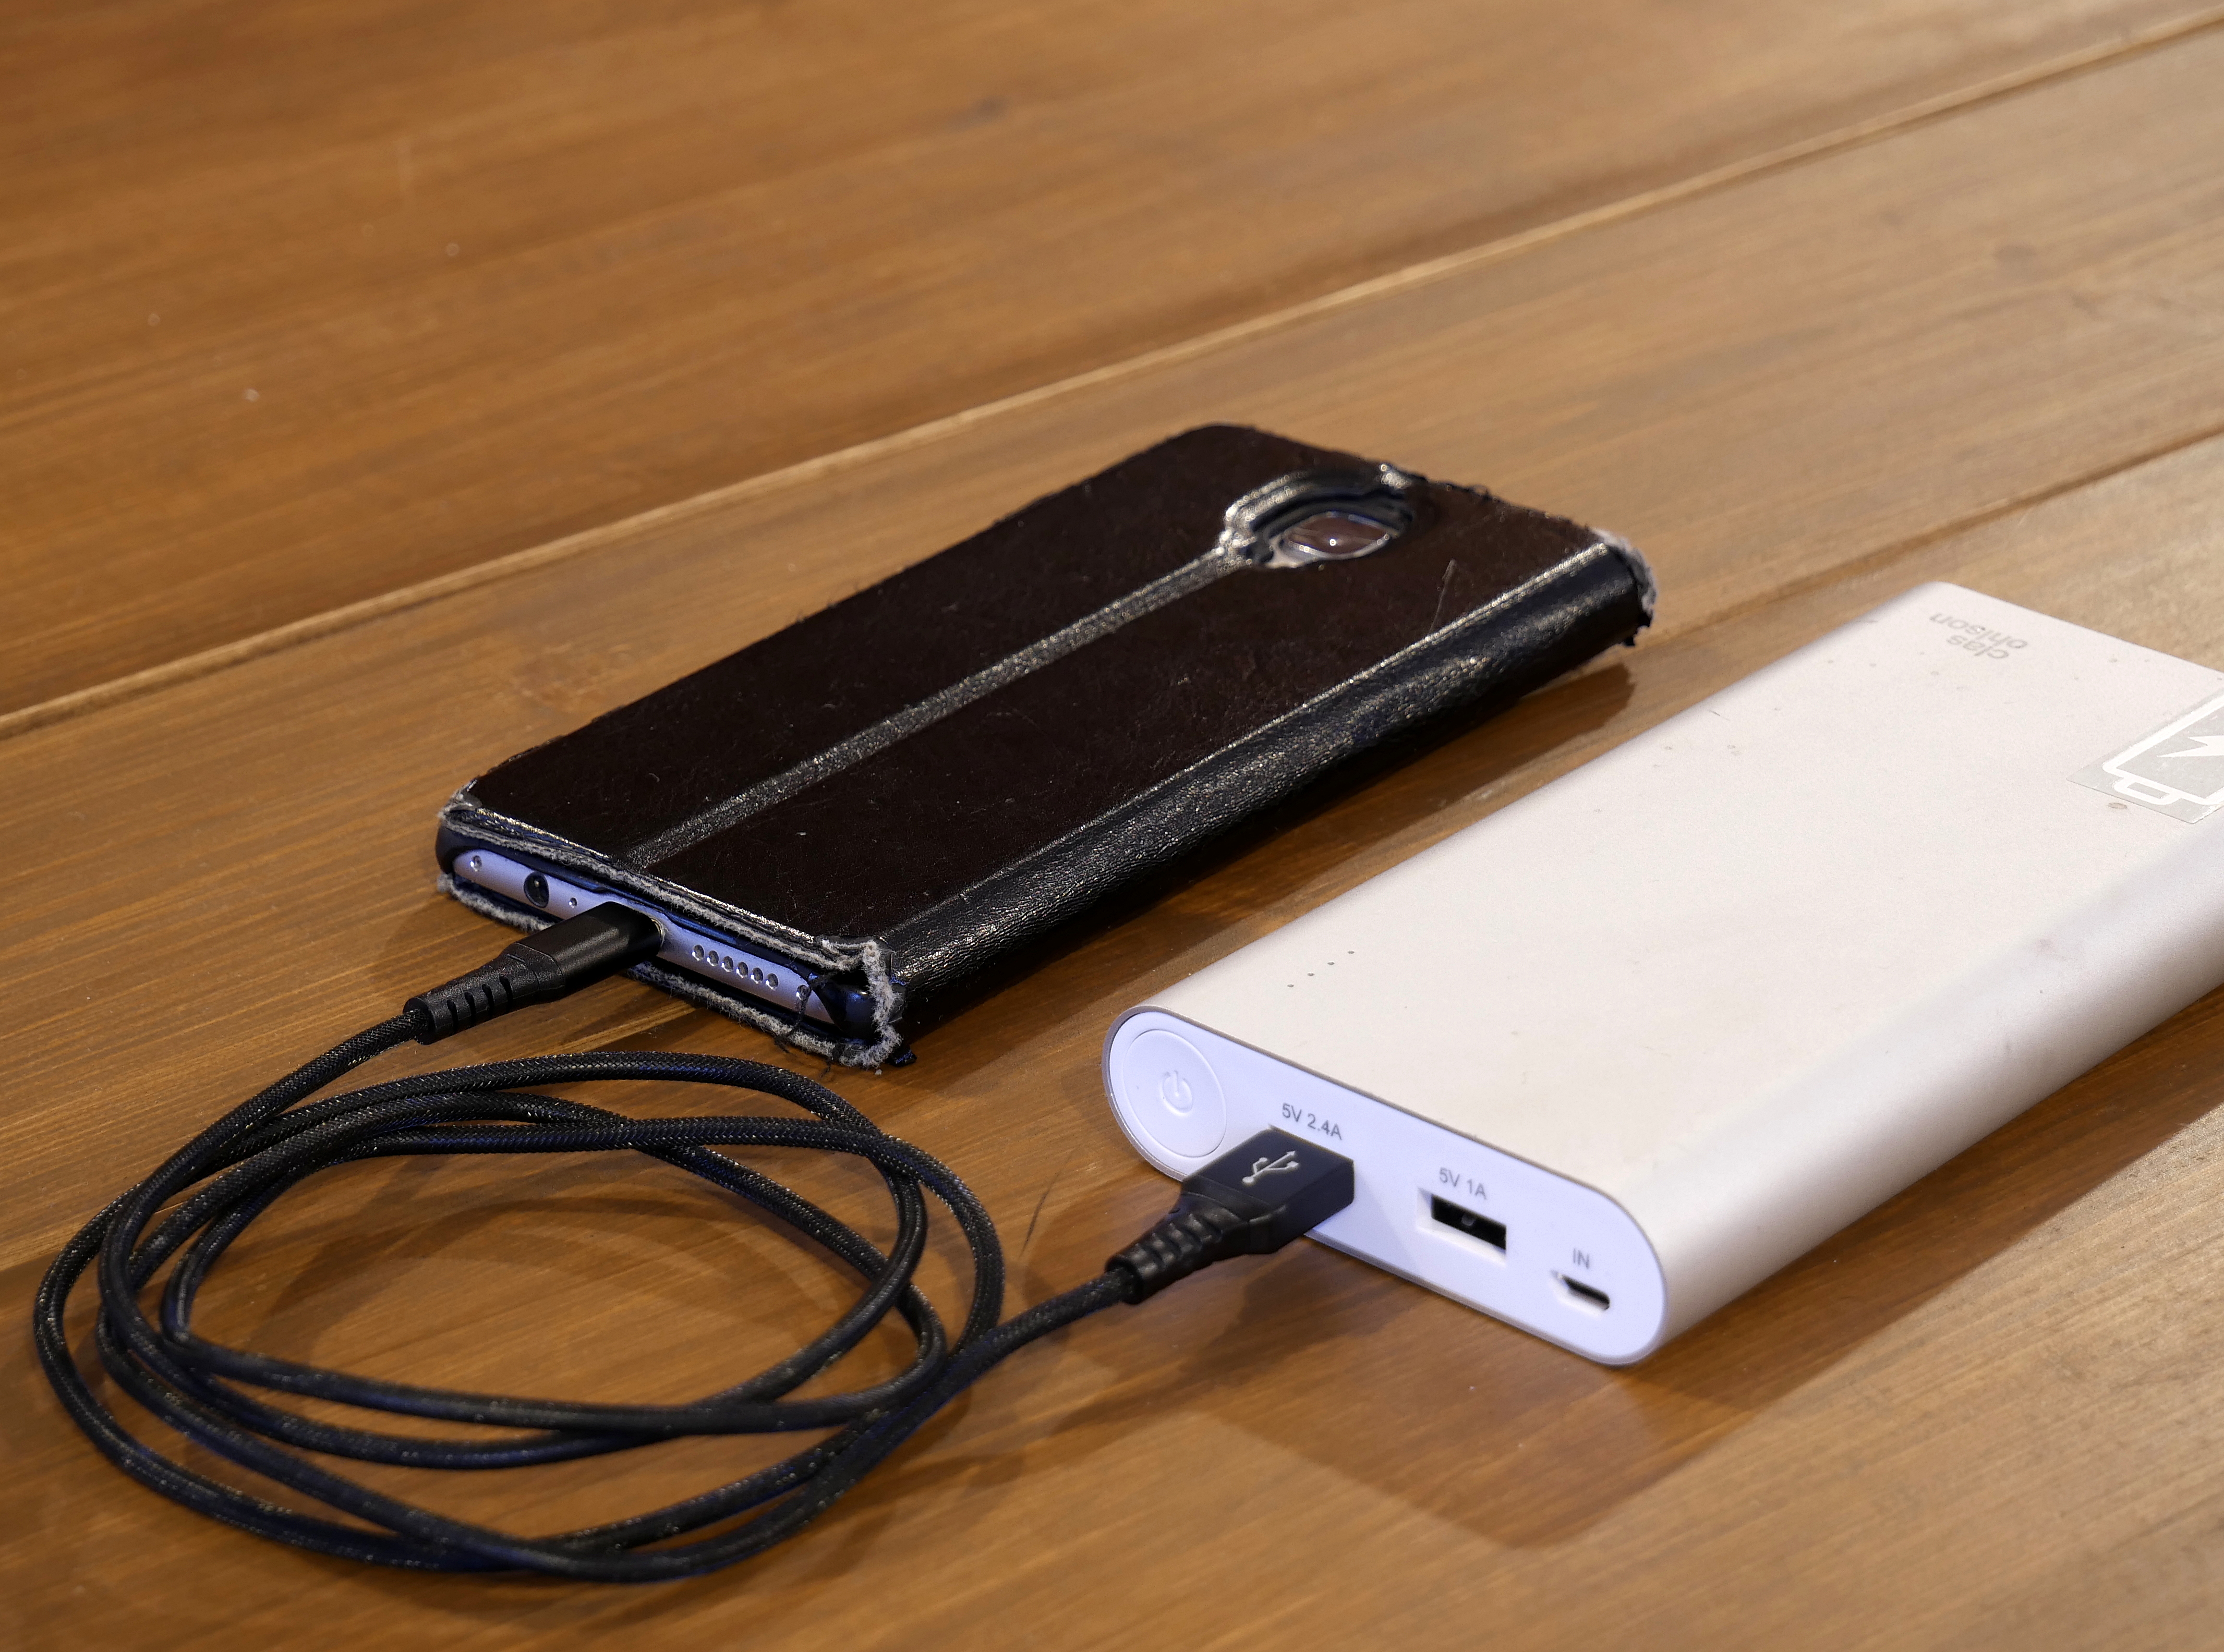 File:Charging smartphone with powerbank 20180312.jpg - Wikimedia